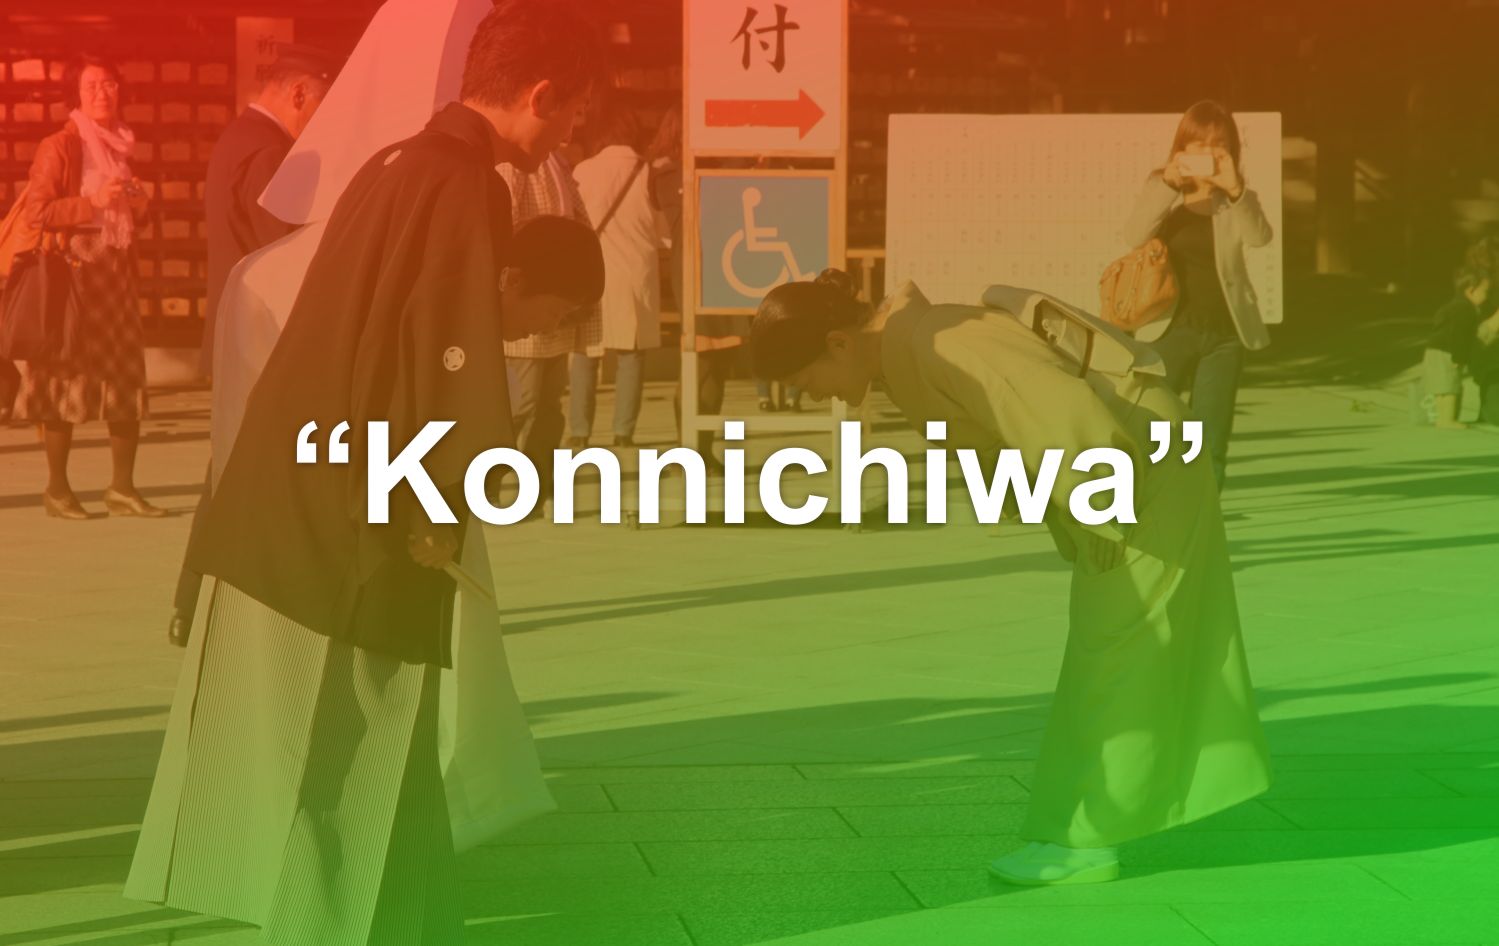 Apa arti konnichiwa dalam bahasa Indonesia?